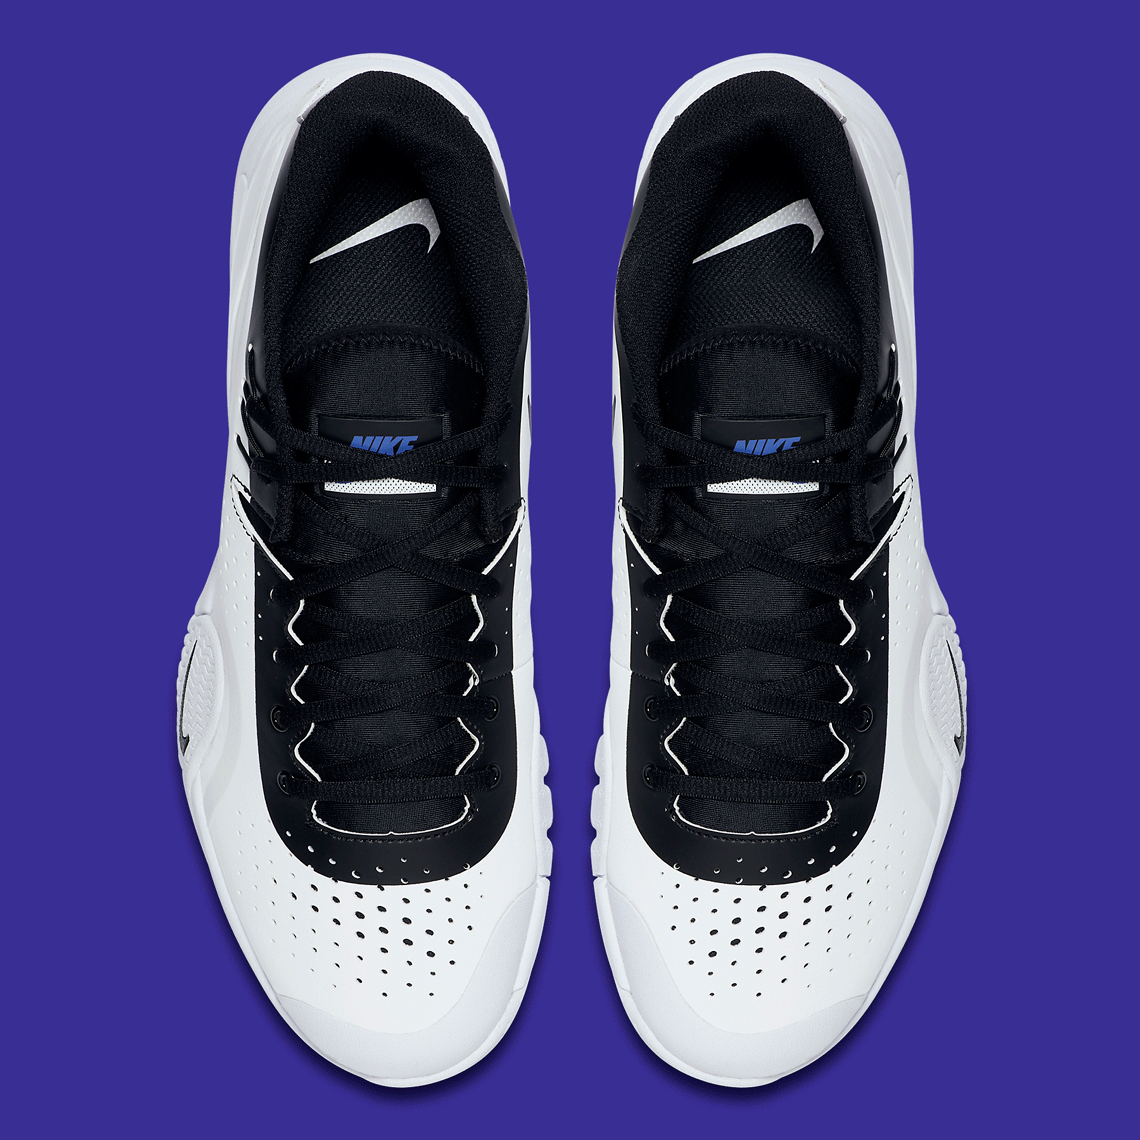 Nikecourt adidas Dame Lillard x Crazy 1 Bq0234 102 5